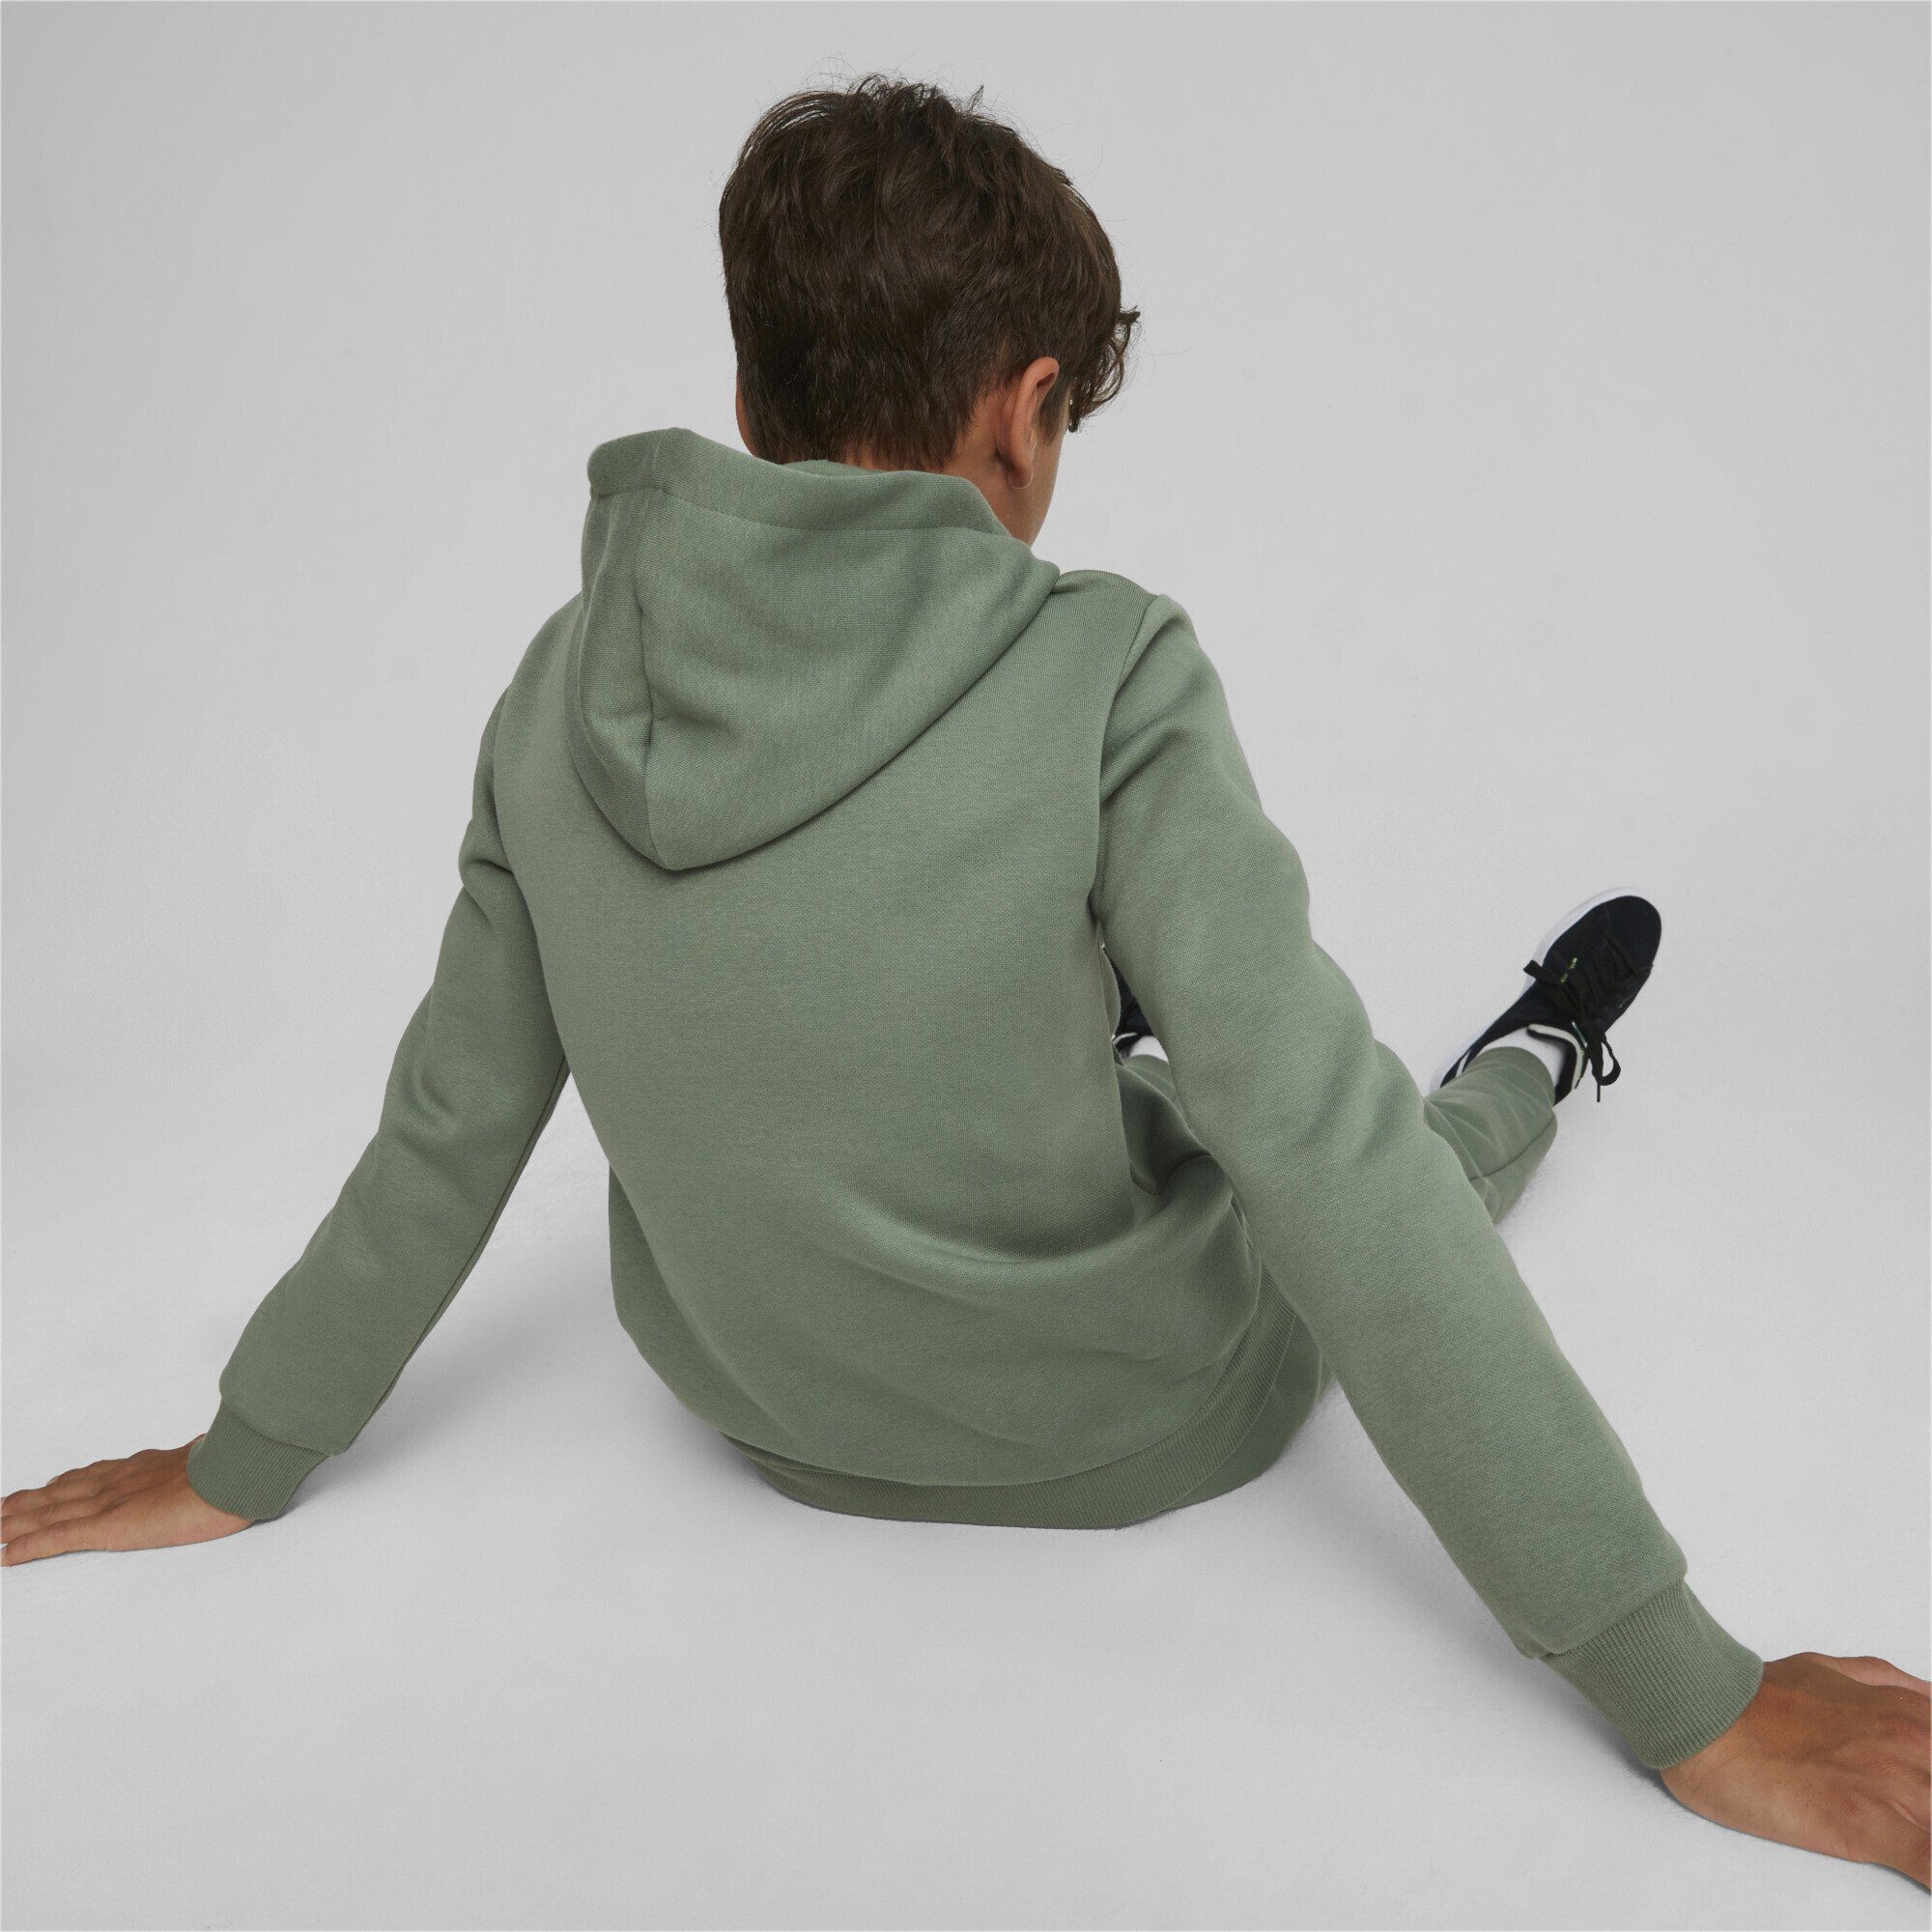 Jungen Logo Green großem mit PUMA Sweatshirt Eucalyptus Essentials Hoodie